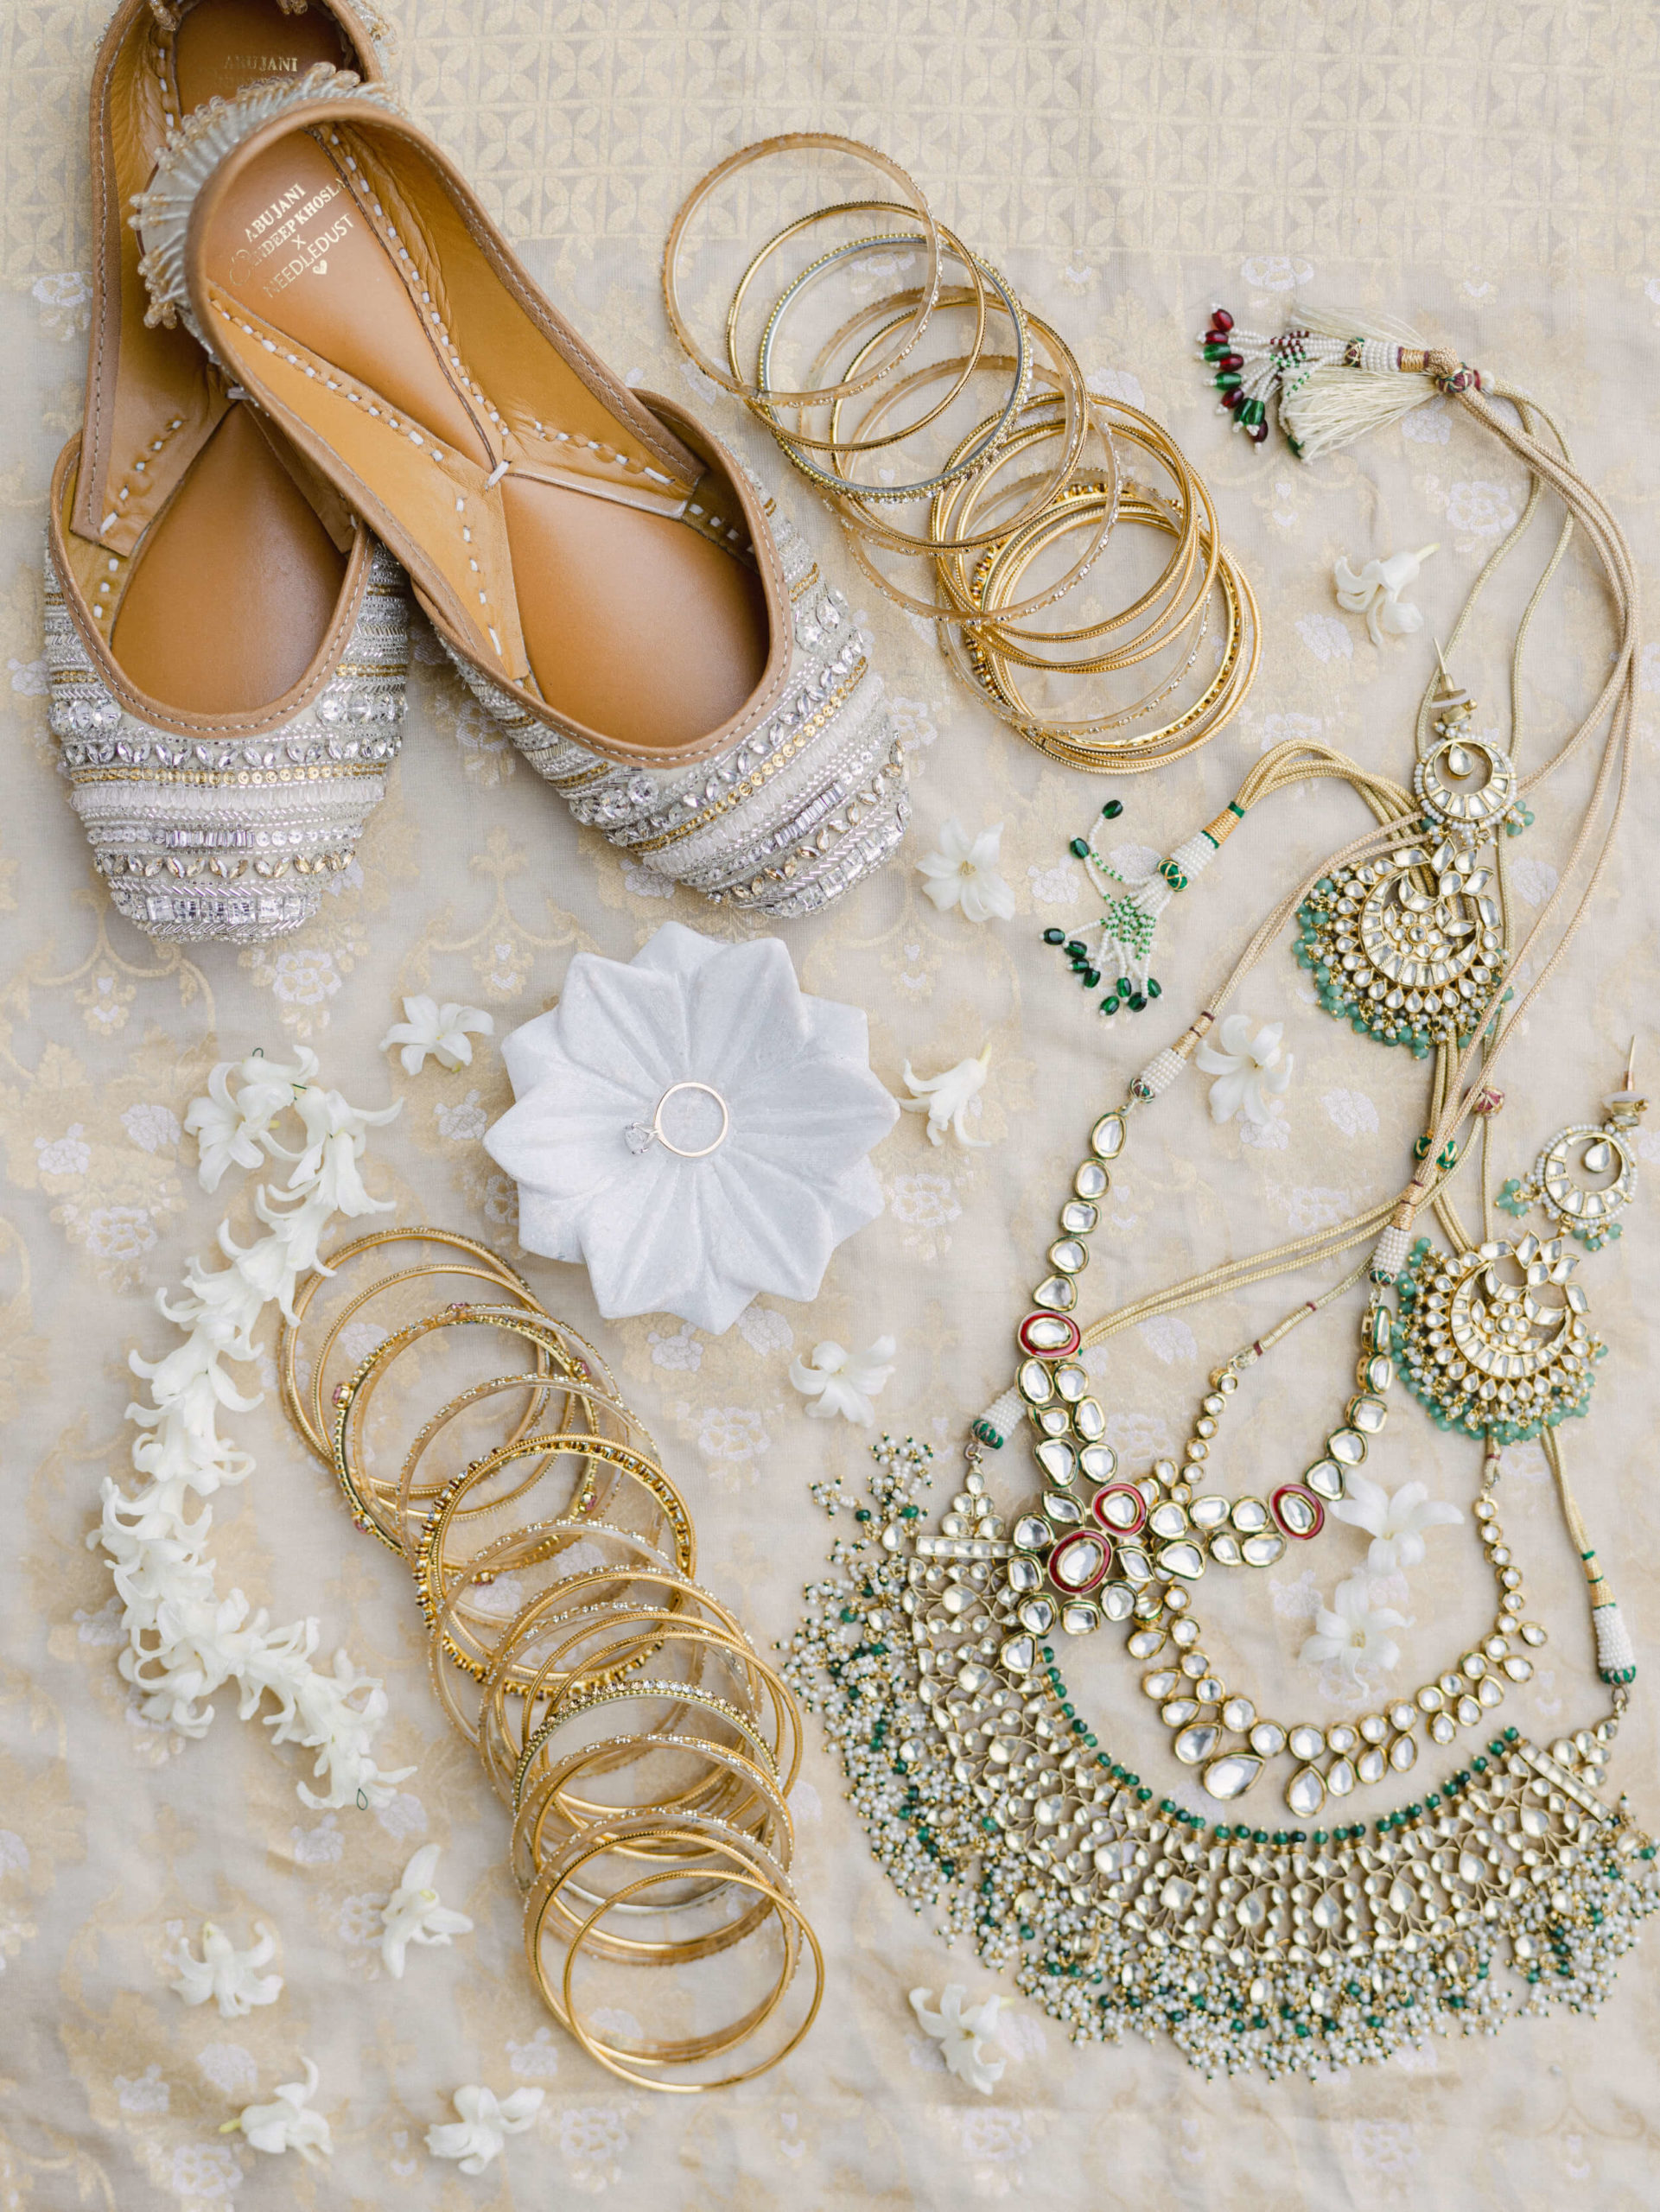 Sapna's wedding accessories